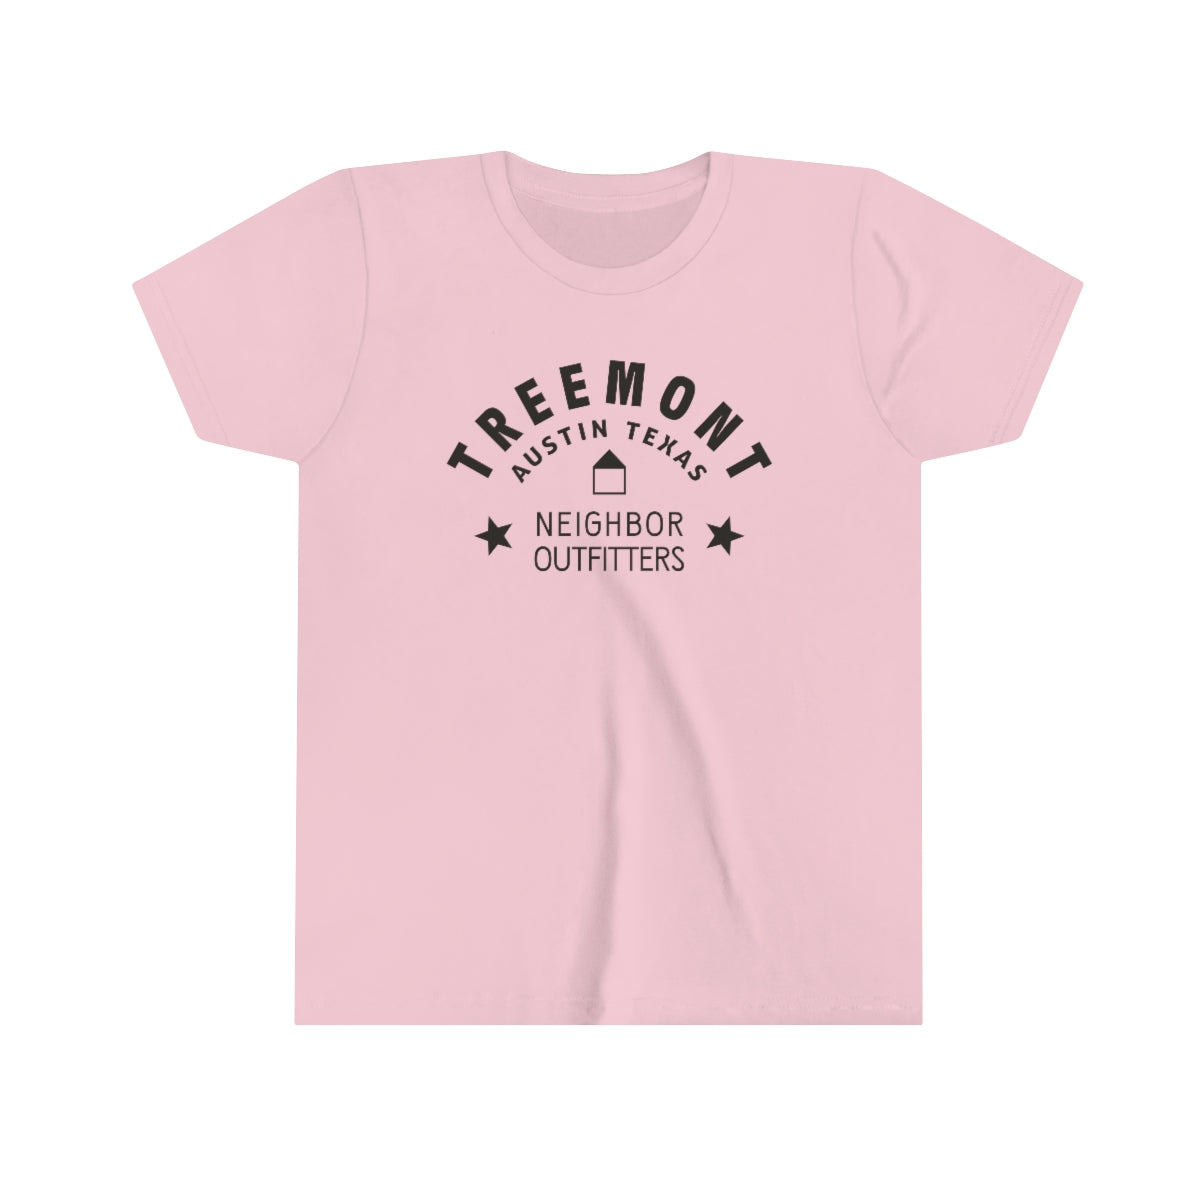 Kids Treemont T-Shirt: "Neighborhood Star"